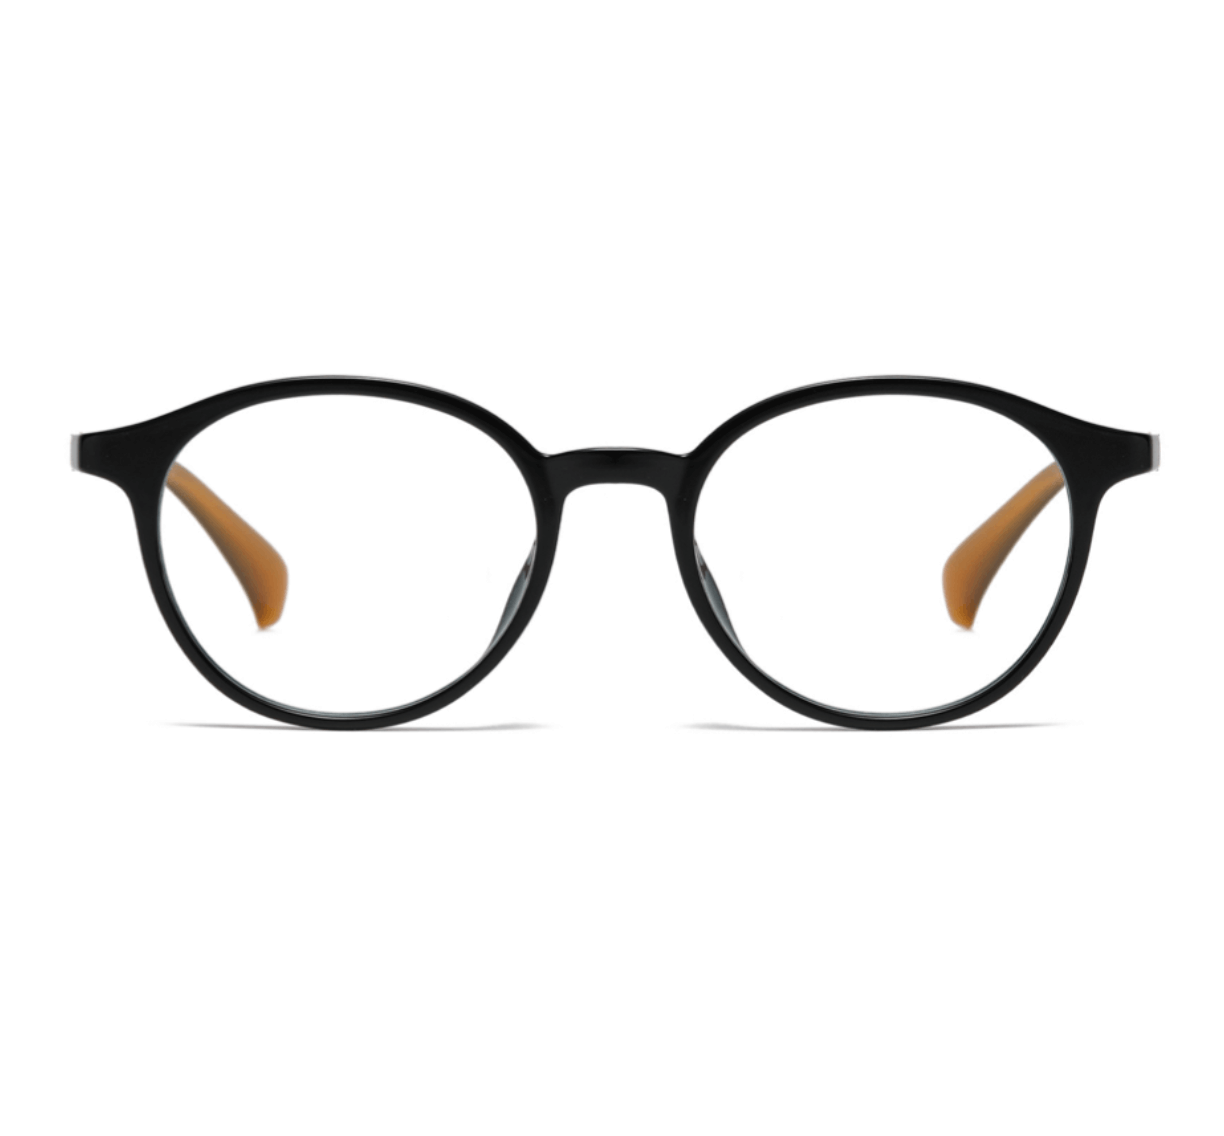 teenage glasses frames, custom spectacle frames, glasses frames China, eyeglass suppliers